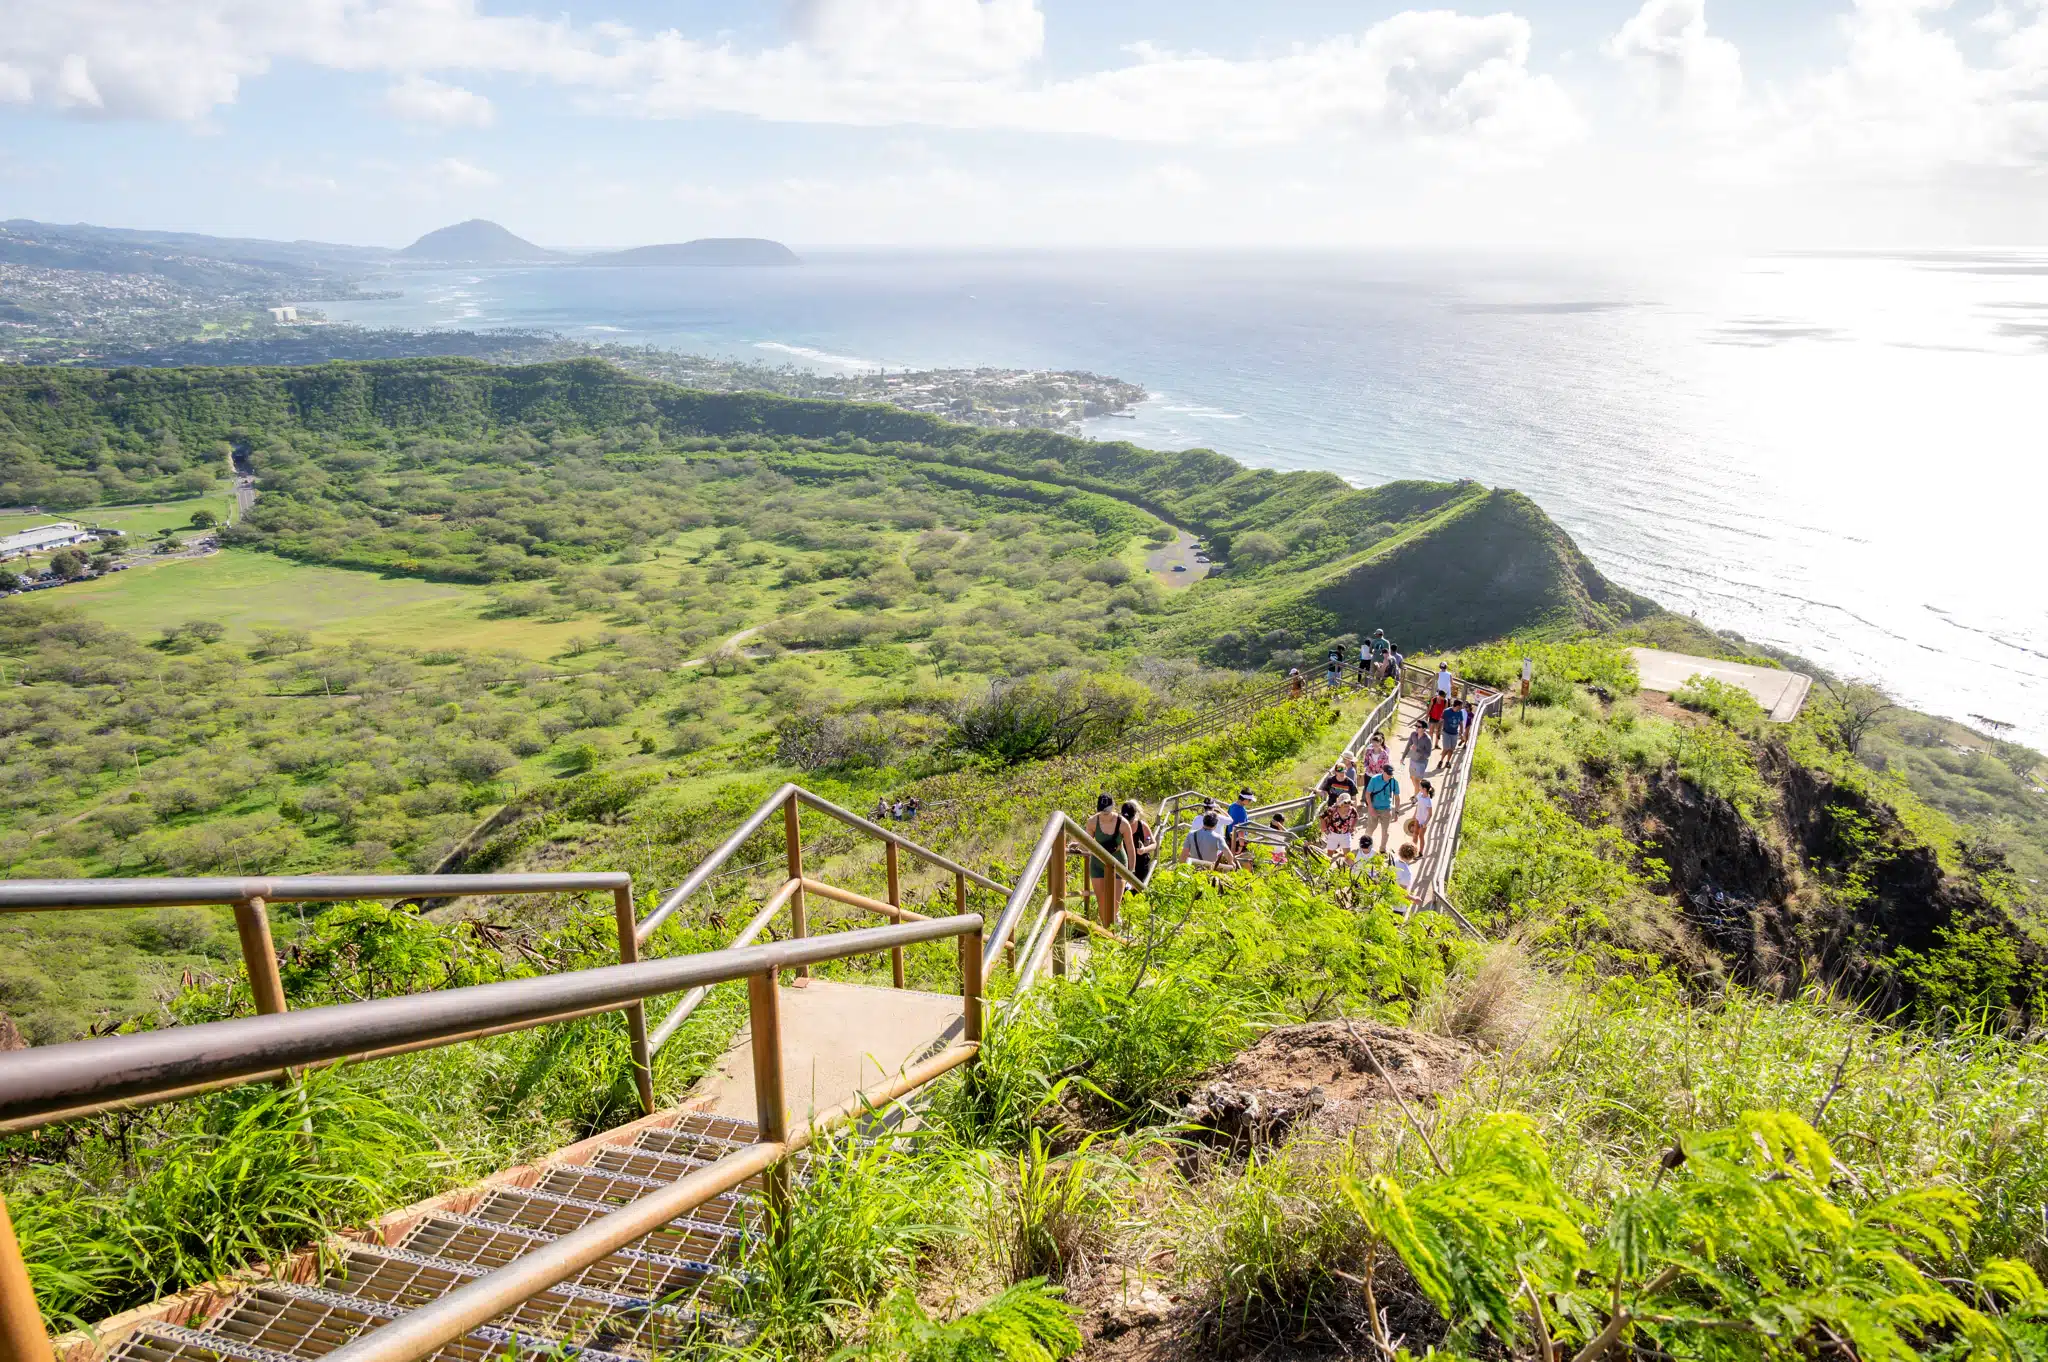 Diamond Head Summit Trail is a Hiking Trail located in the city of Honolulu on Oahu, Hawaii